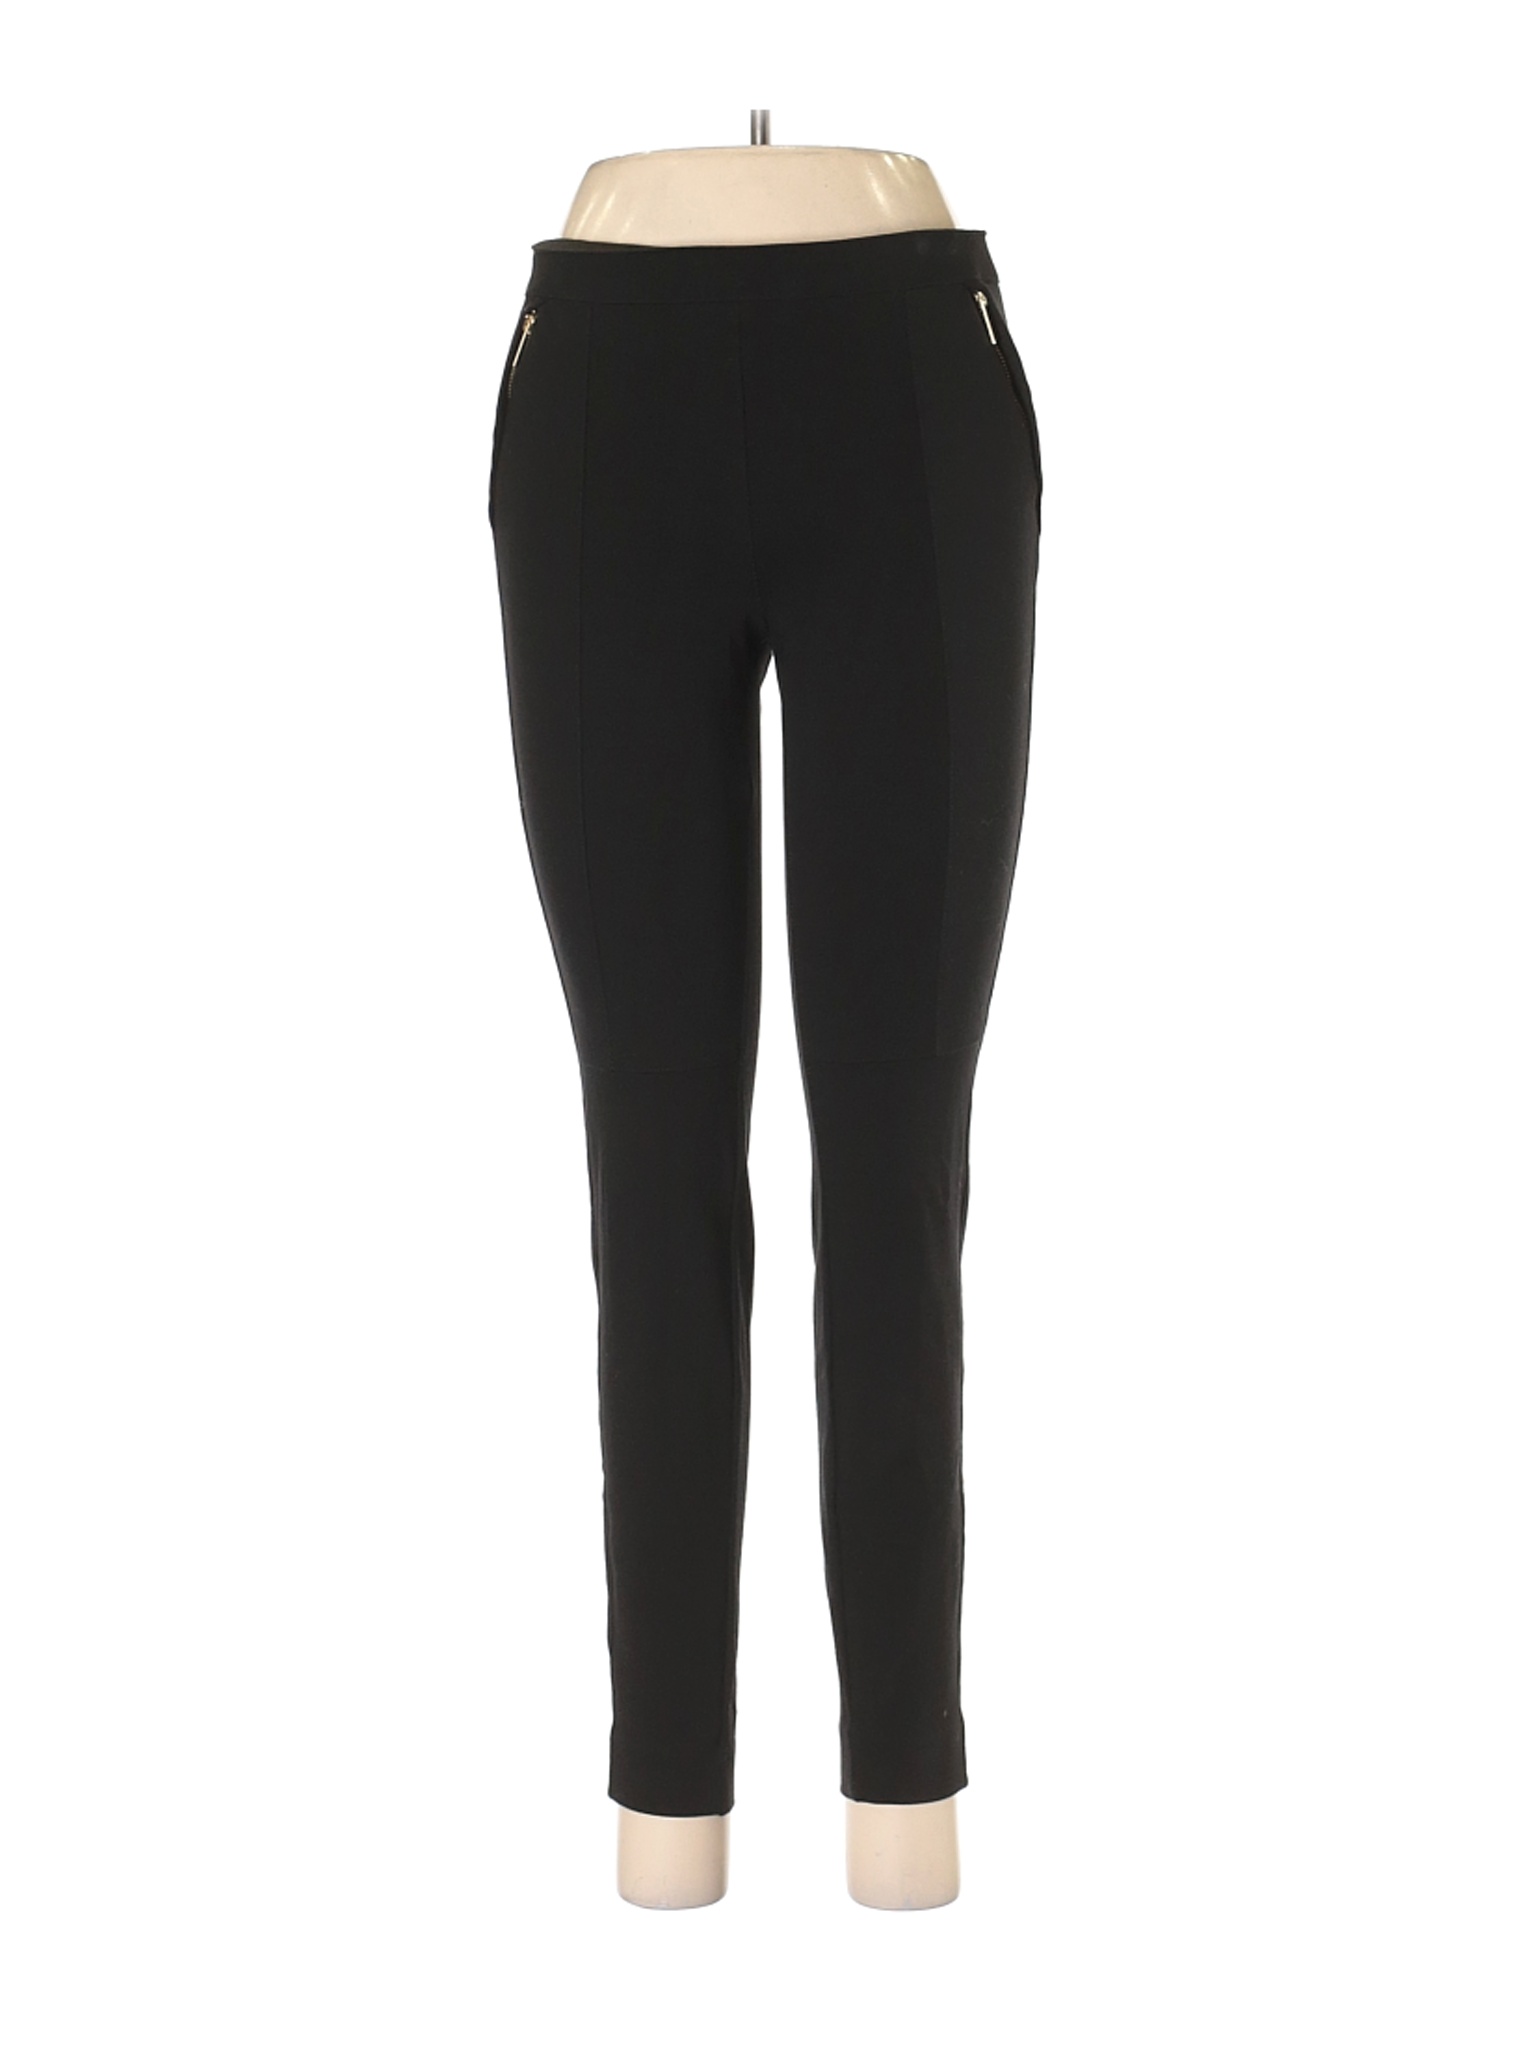 H&M Women Black Casual Pants 6 | eBay